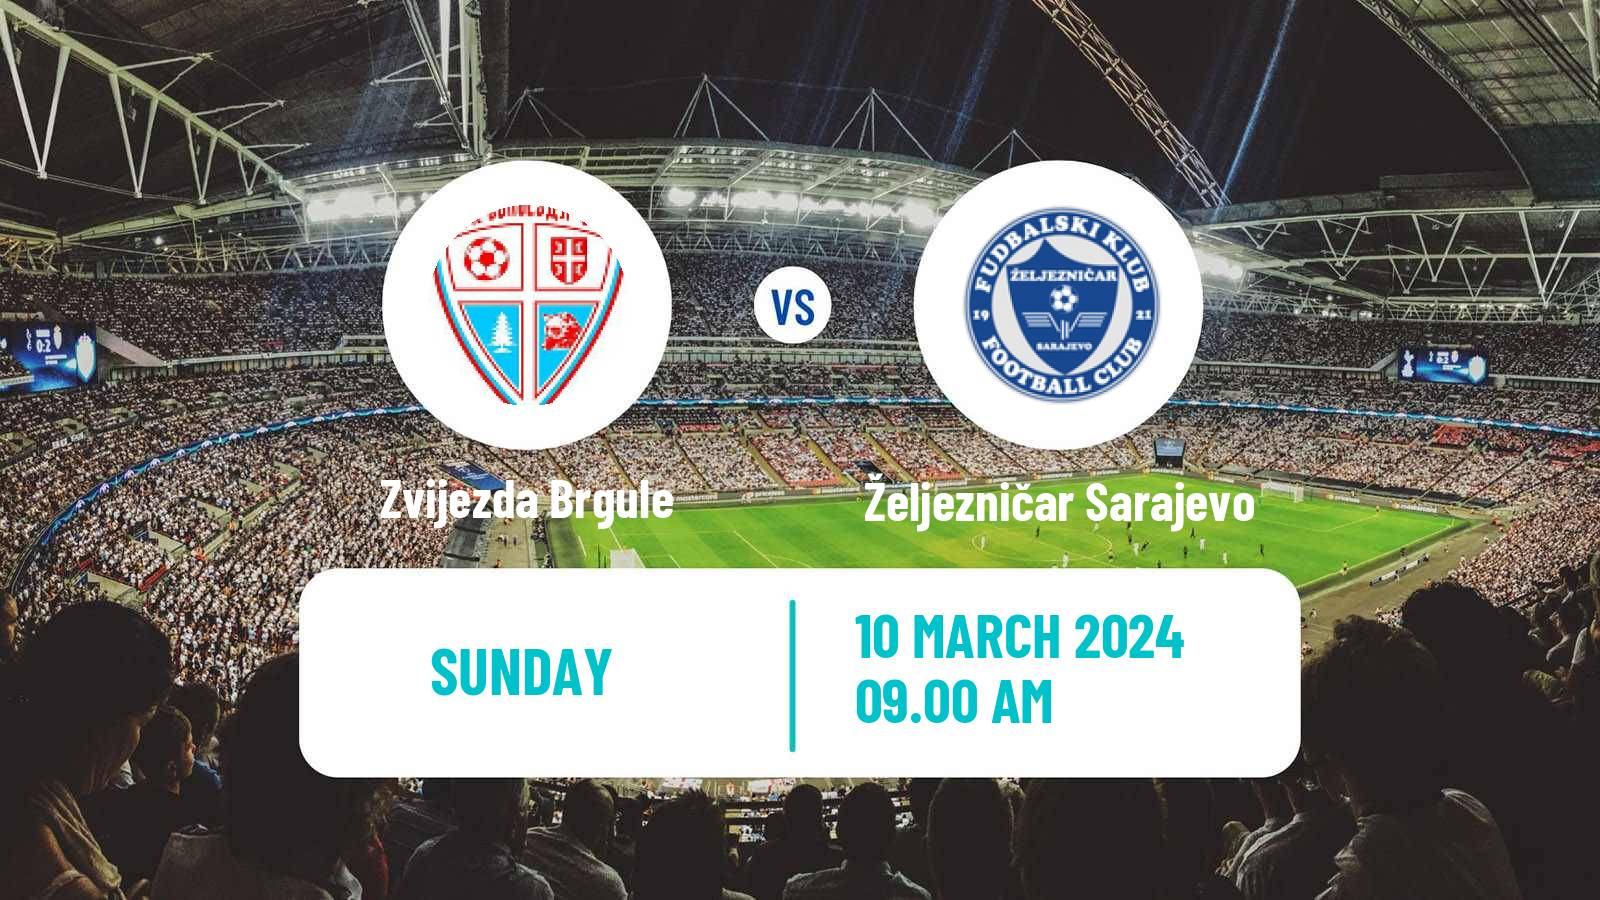 Soccer Bosnian Premier League Zvijezda Brgule - Željezničar Sarajevo